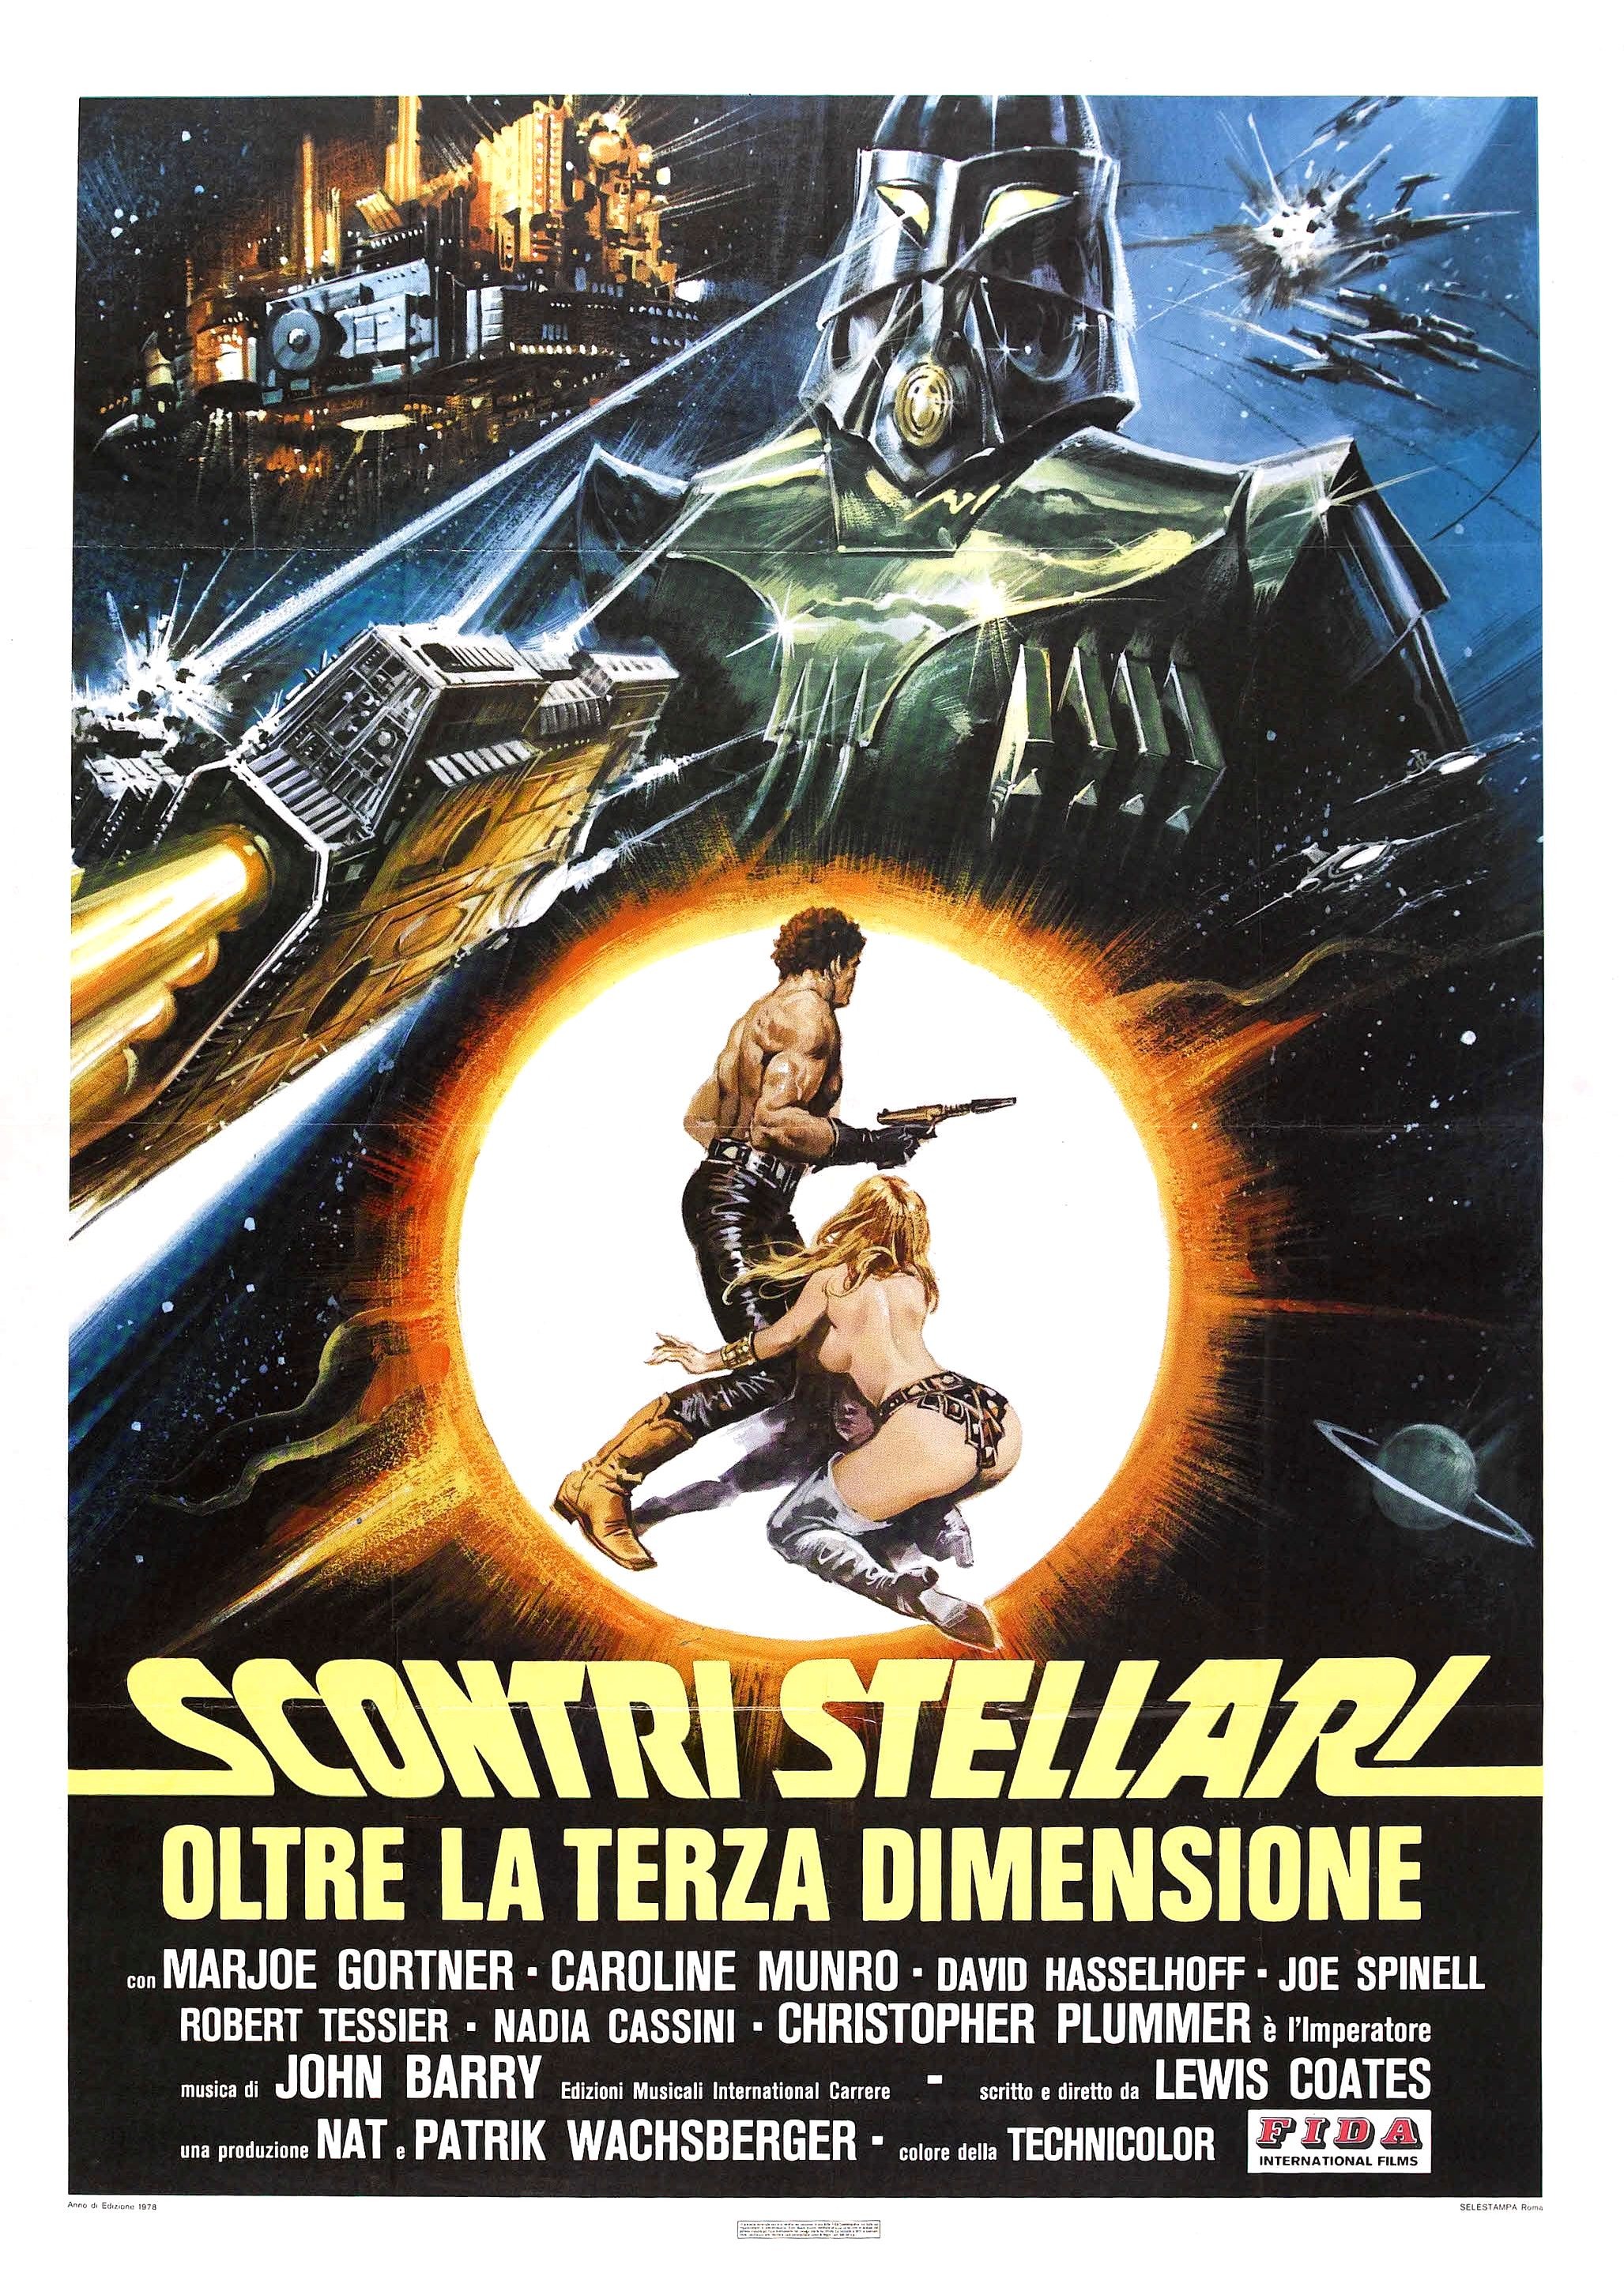 Mega Sized Movie Poster Image for Starcrash (#2 of 3)